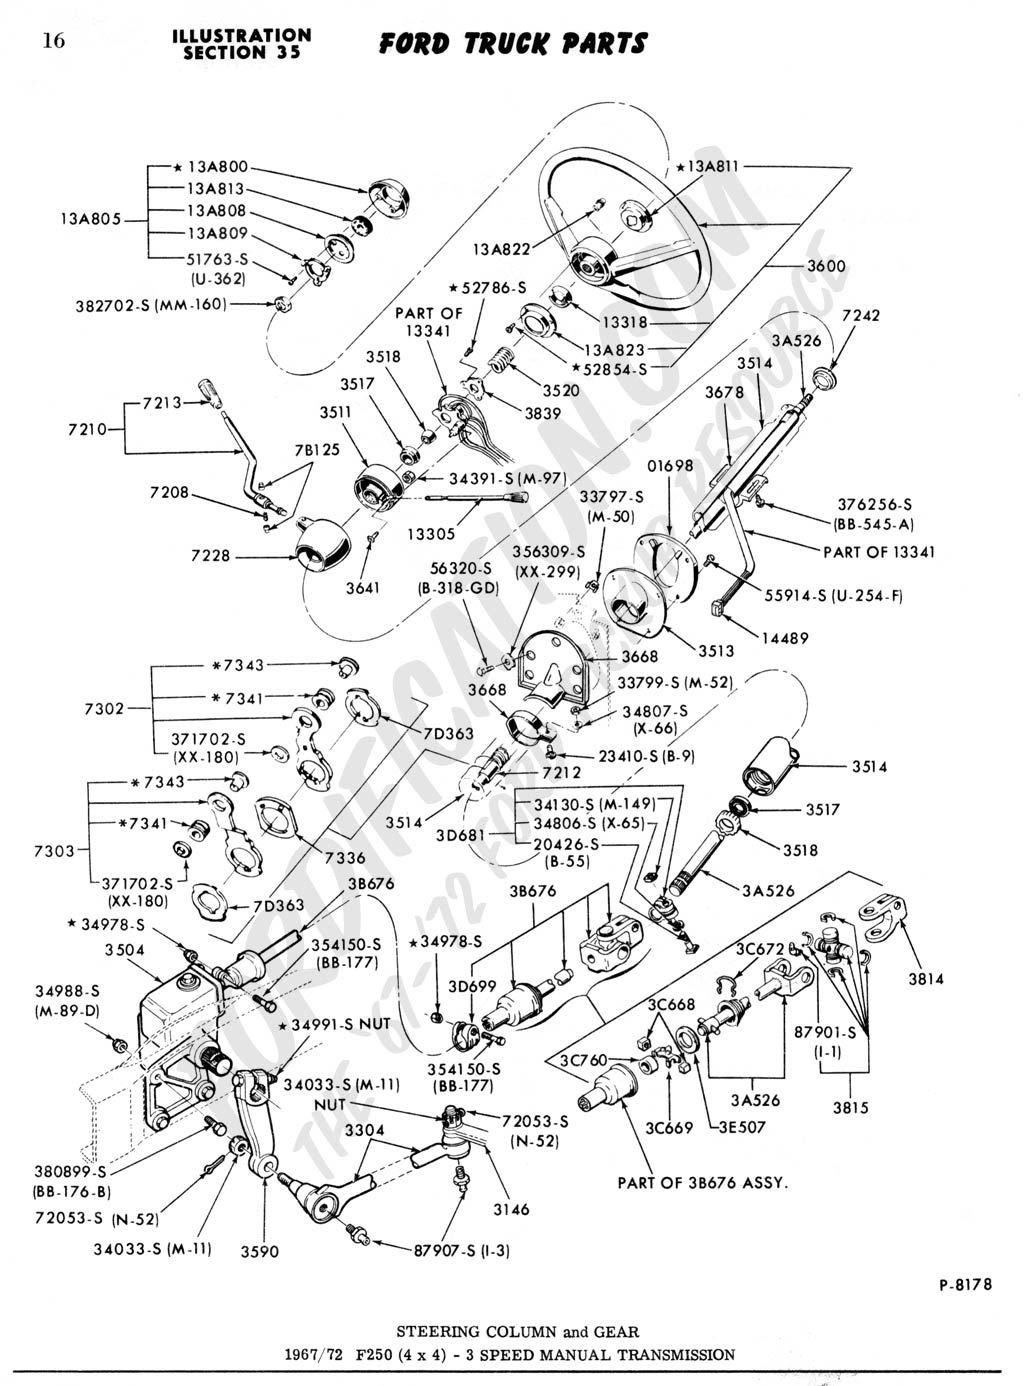 Ford f250 steering column schematic